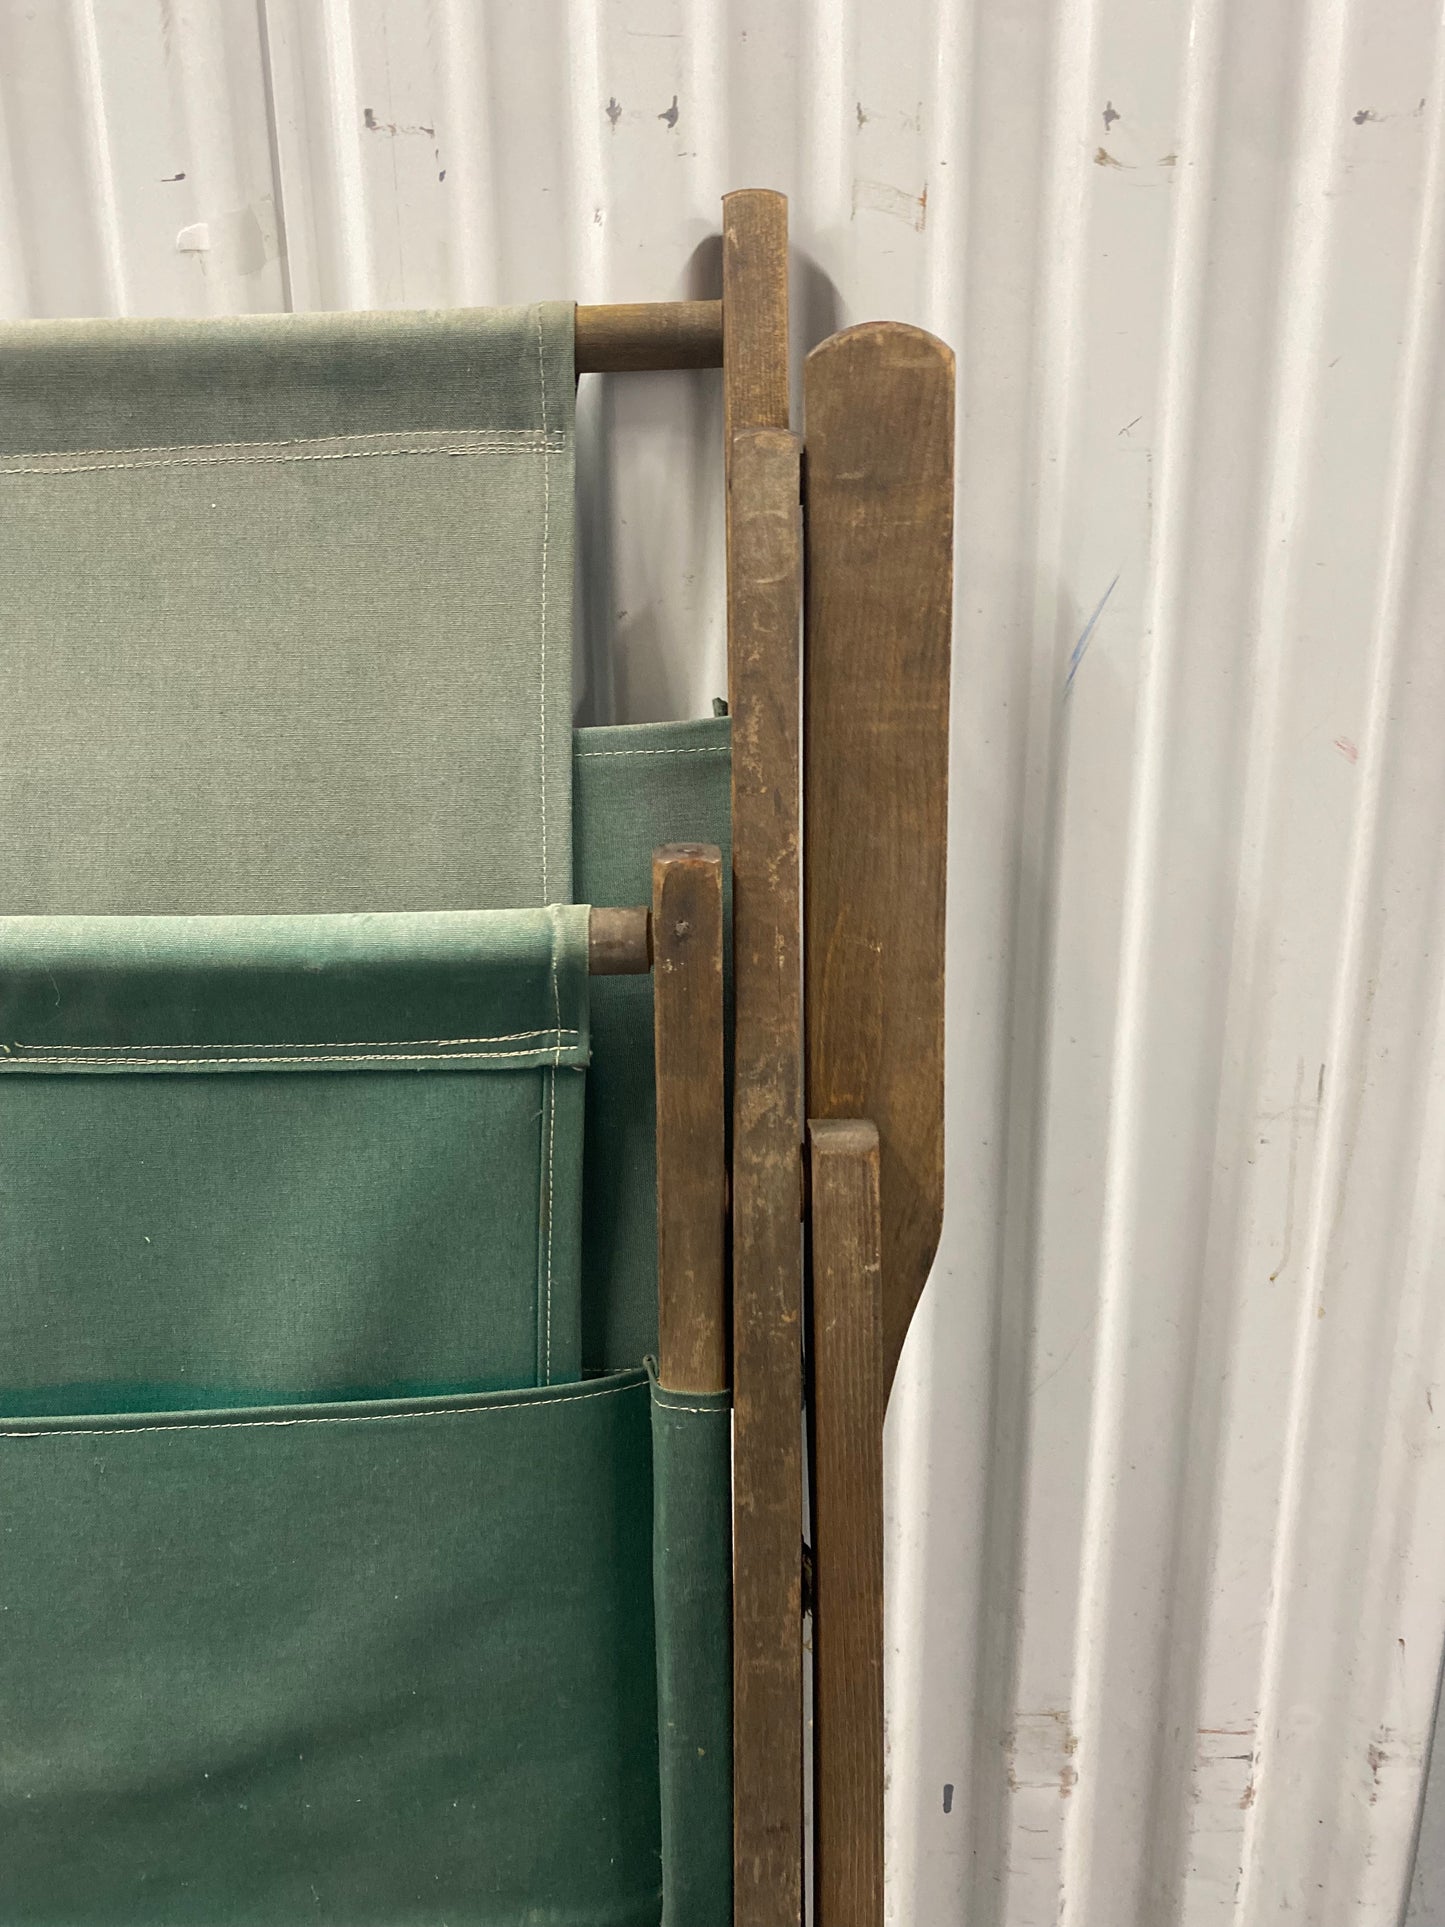 Vintage Green Folding Deck Chair